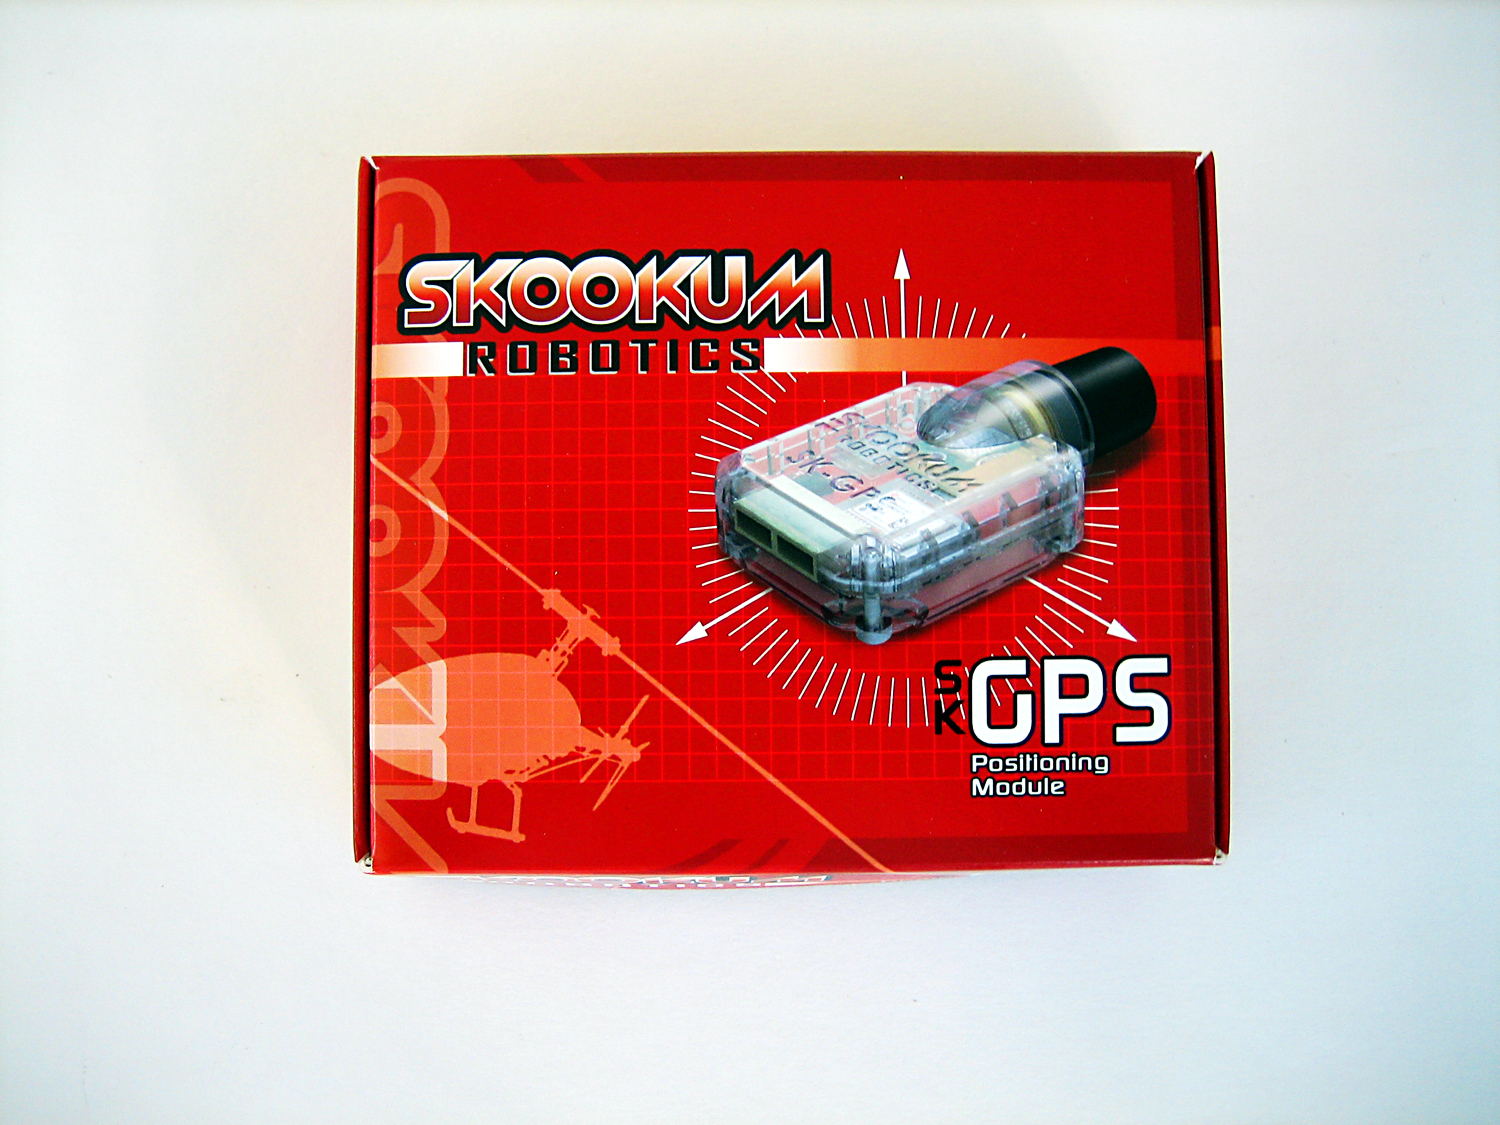 New GPS control from Skookum Robotics